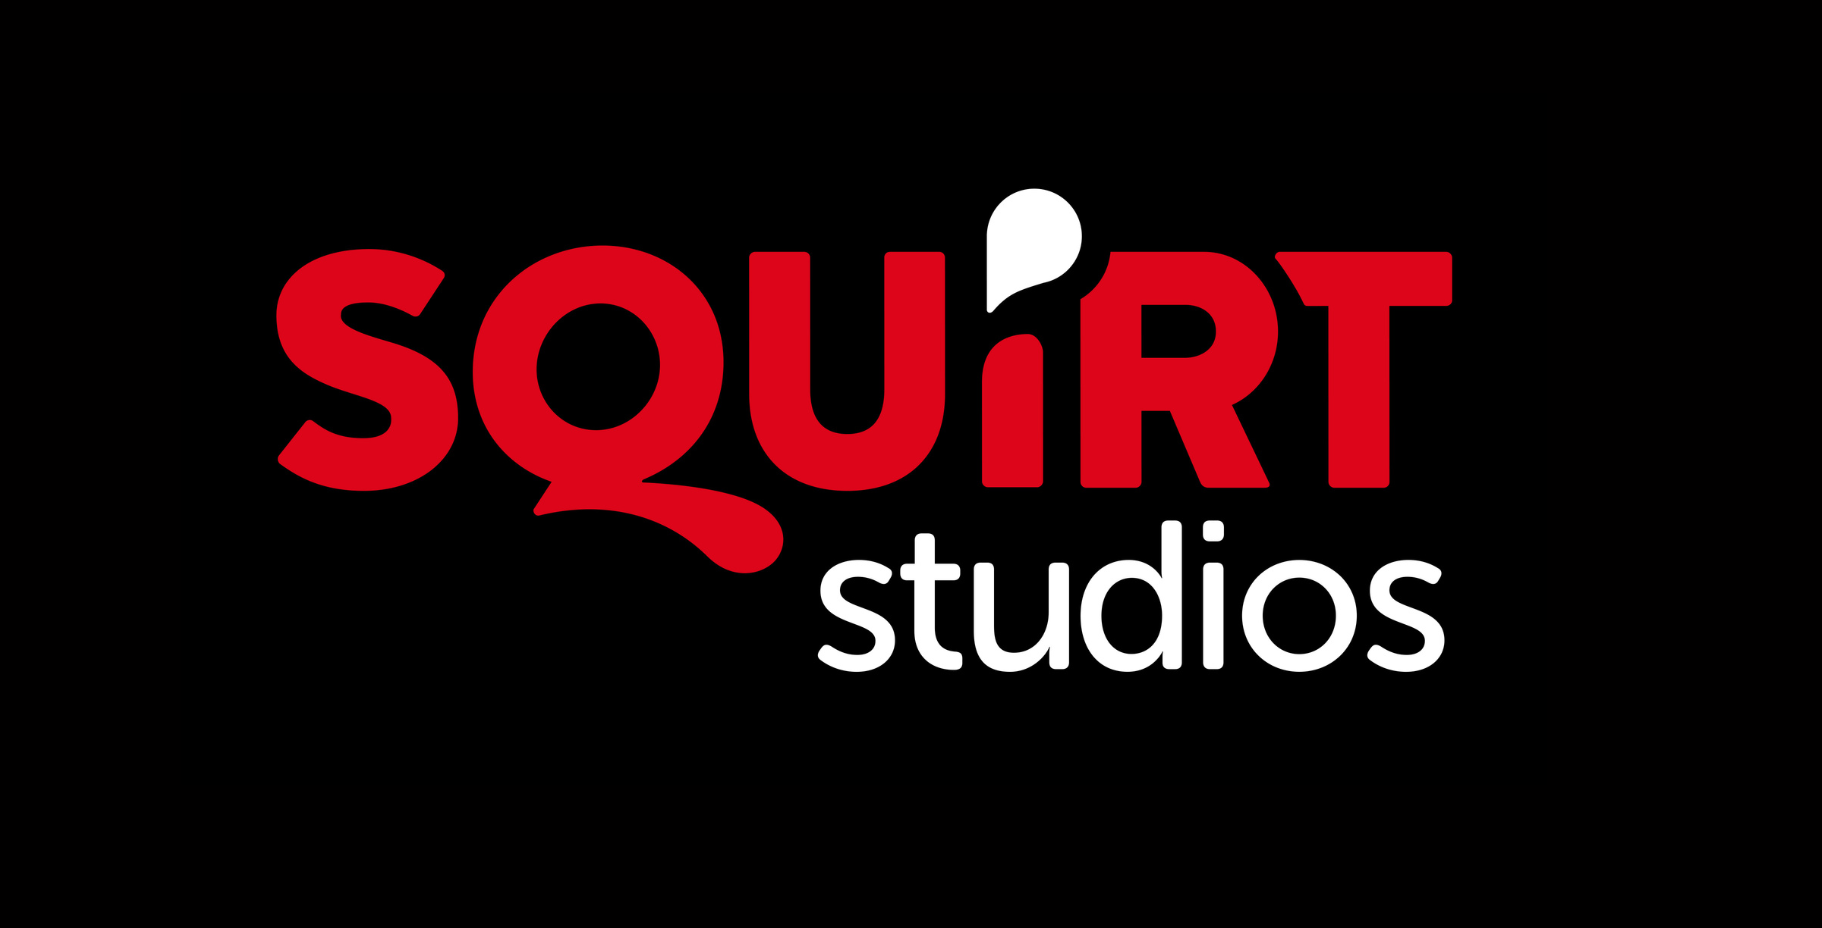 squirt studios xxx gay porn studio on justfor.fans logo